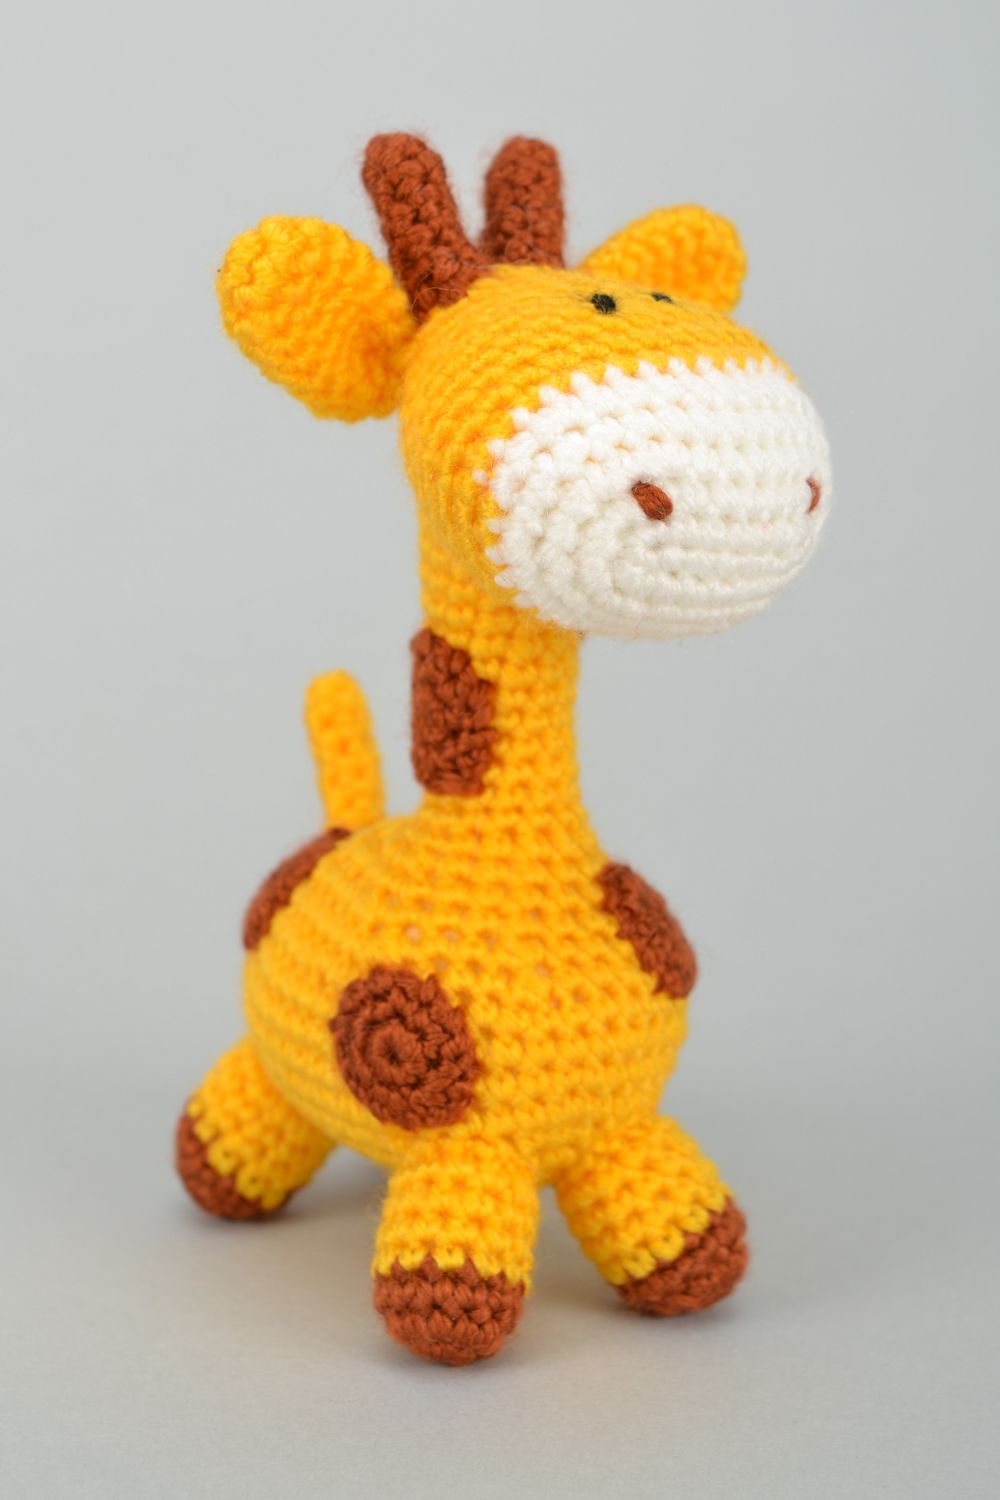 Small crochet toy Giraffe photo 1